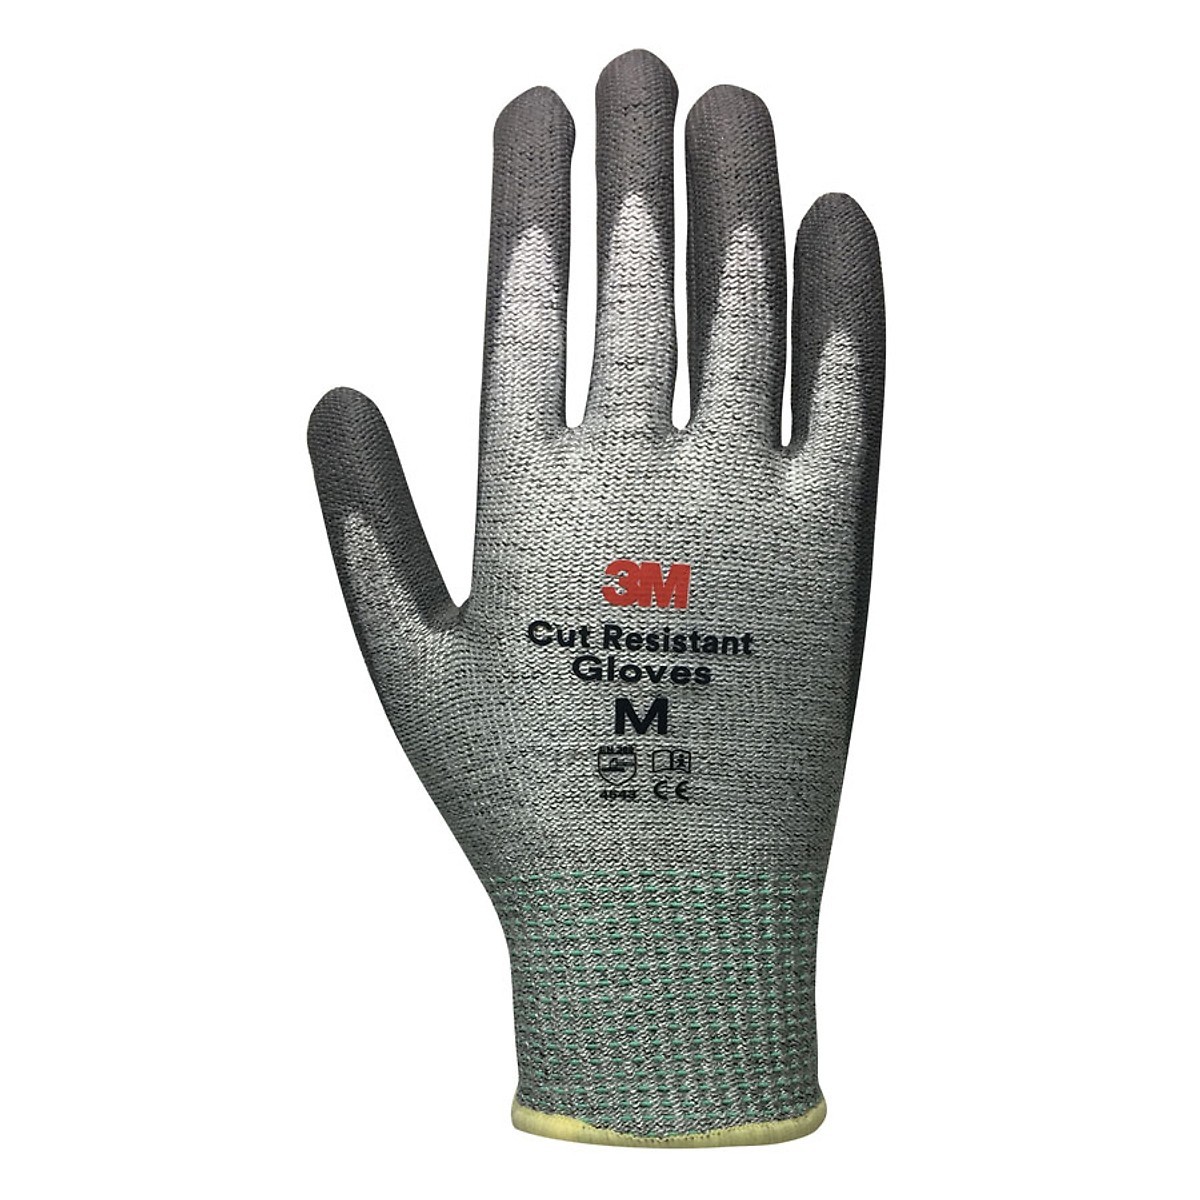 3M Cut Resistant Gloves (ATG-3M-LV3-S)